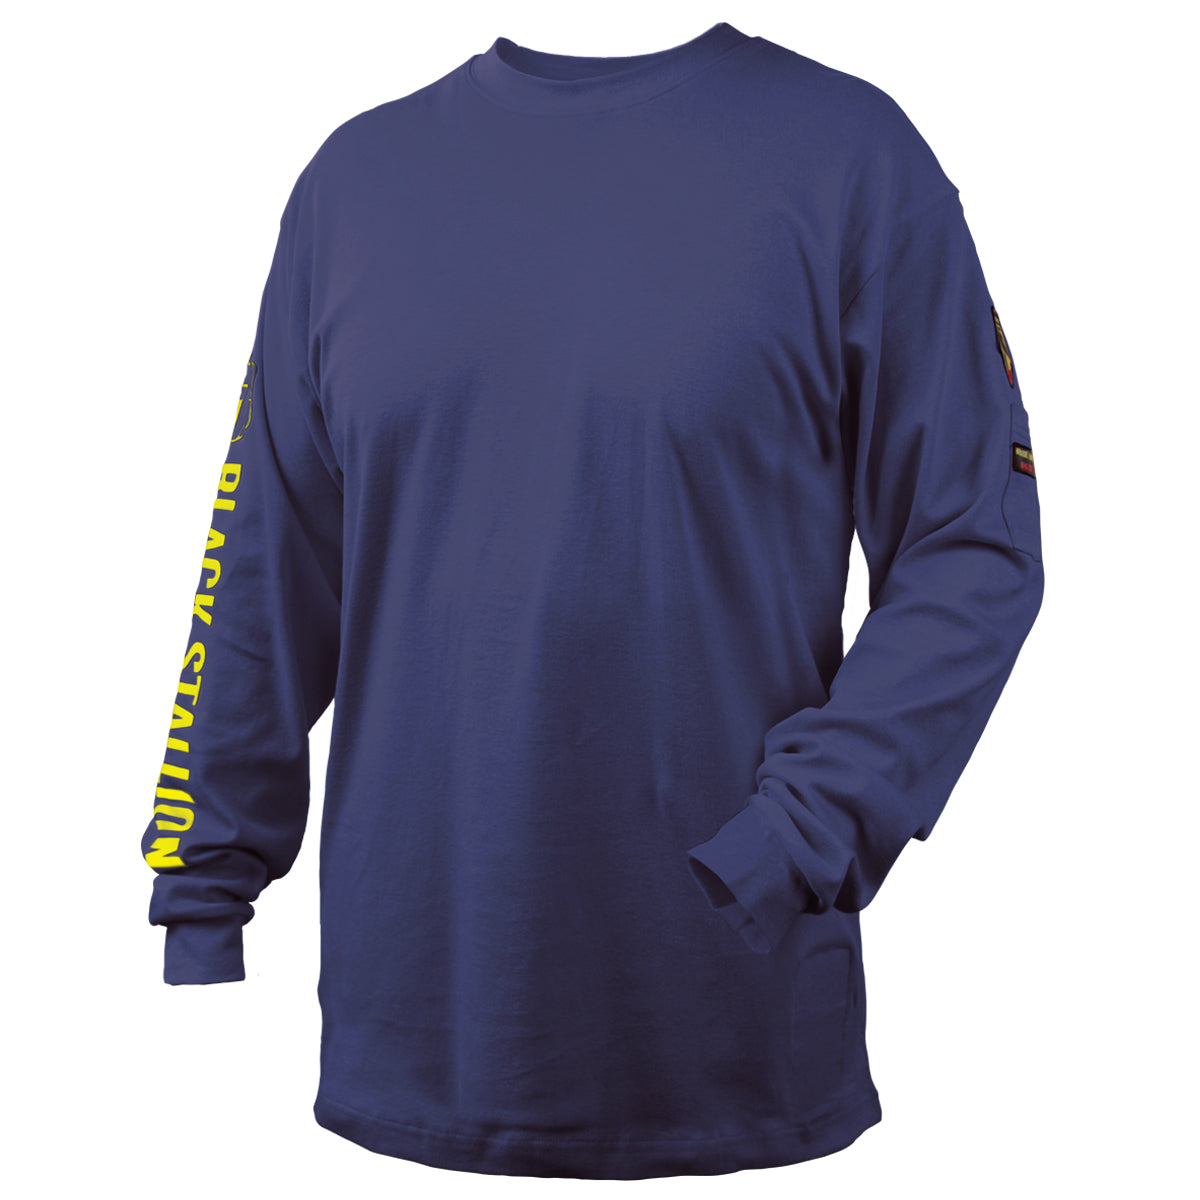 BLACK STALLION - 7 oz. FR Cotton Knit Long-Sleeve T-Shirt, Gray